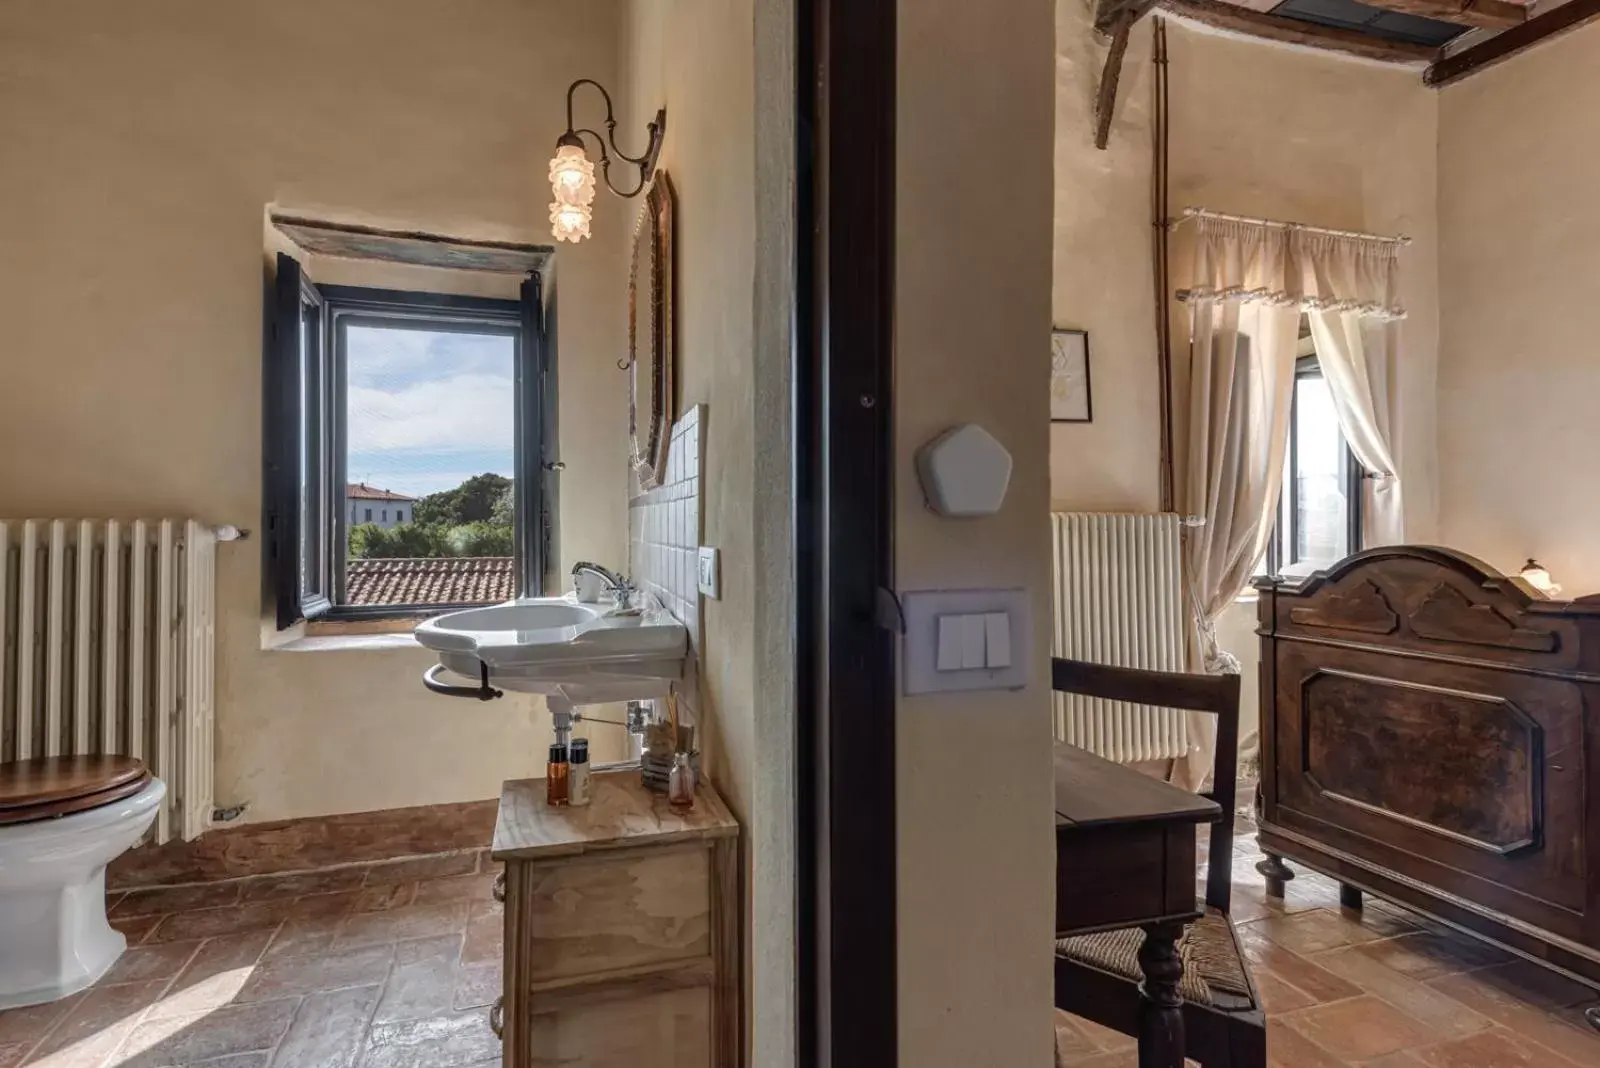 Photo of the whole room, Bathroom in Convento San Bartolomeo